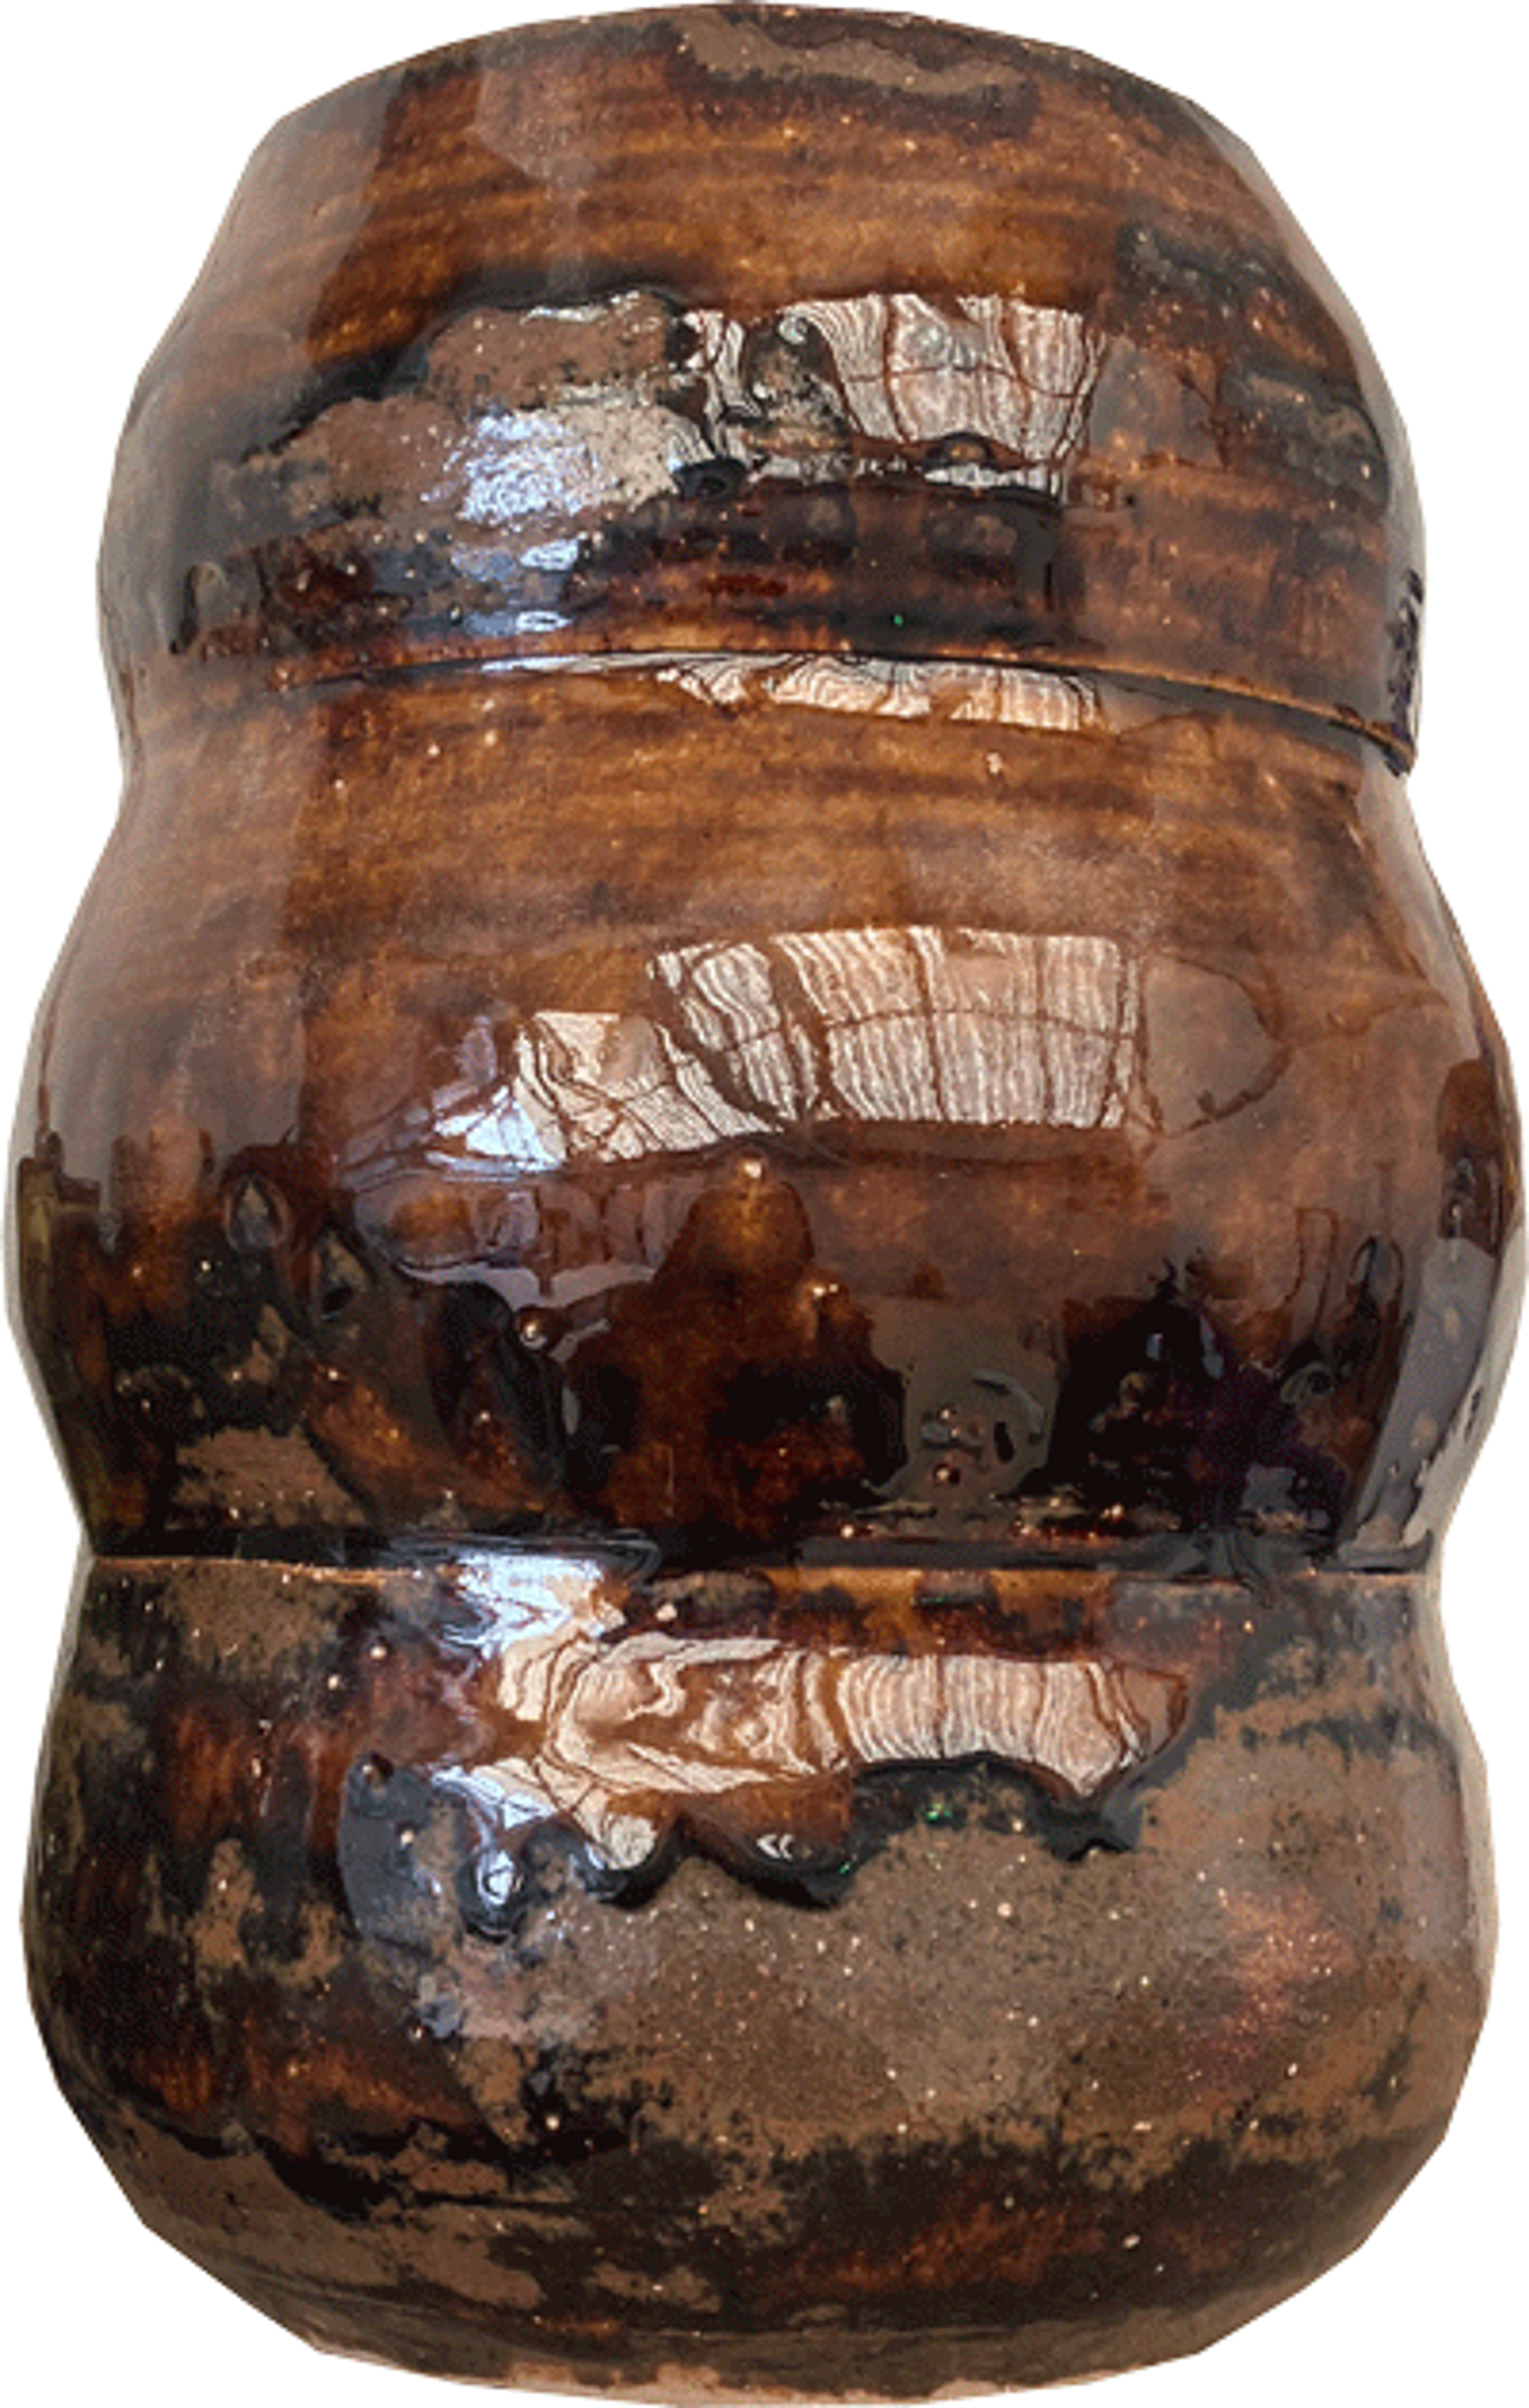 A pot with brown glaze